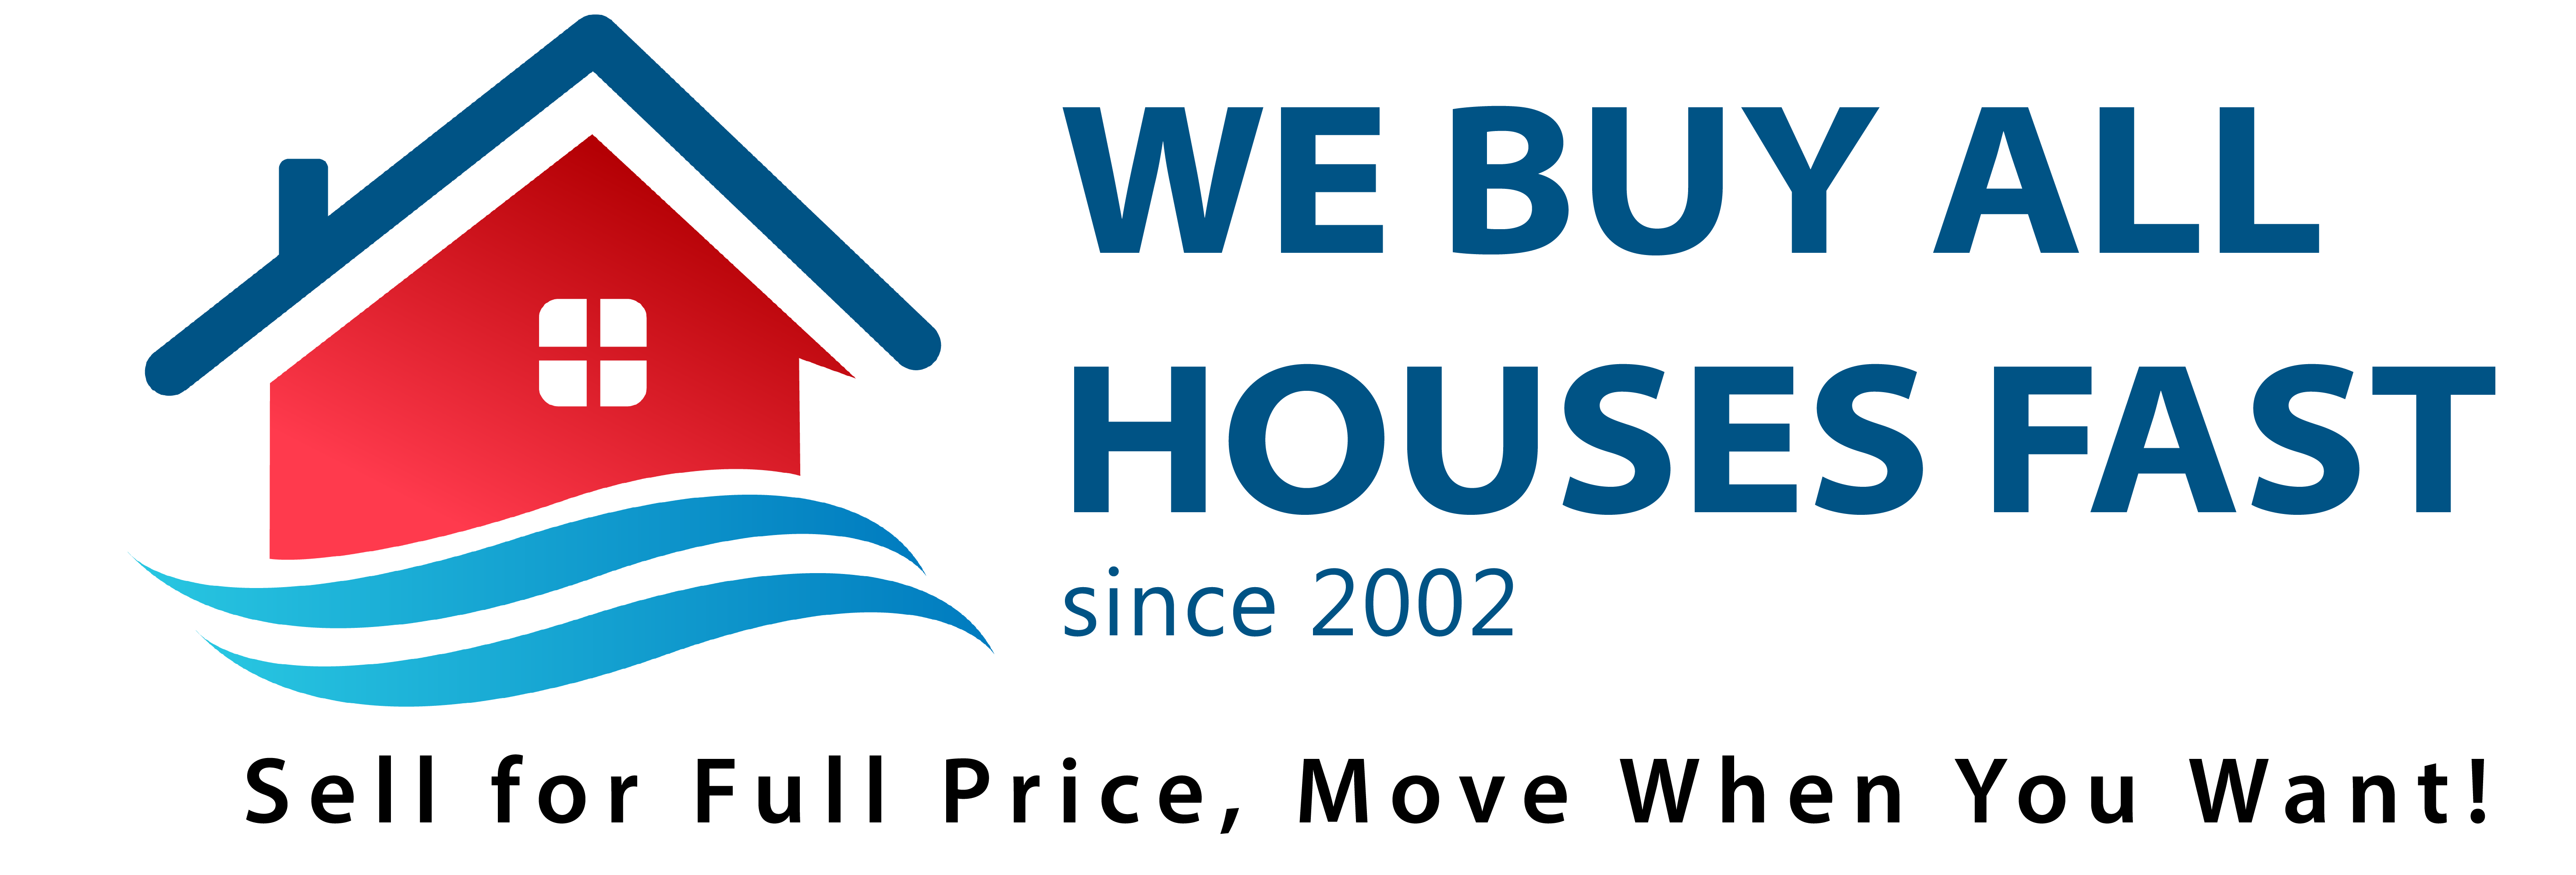 WE BUY ALL HOUSES FAST logo